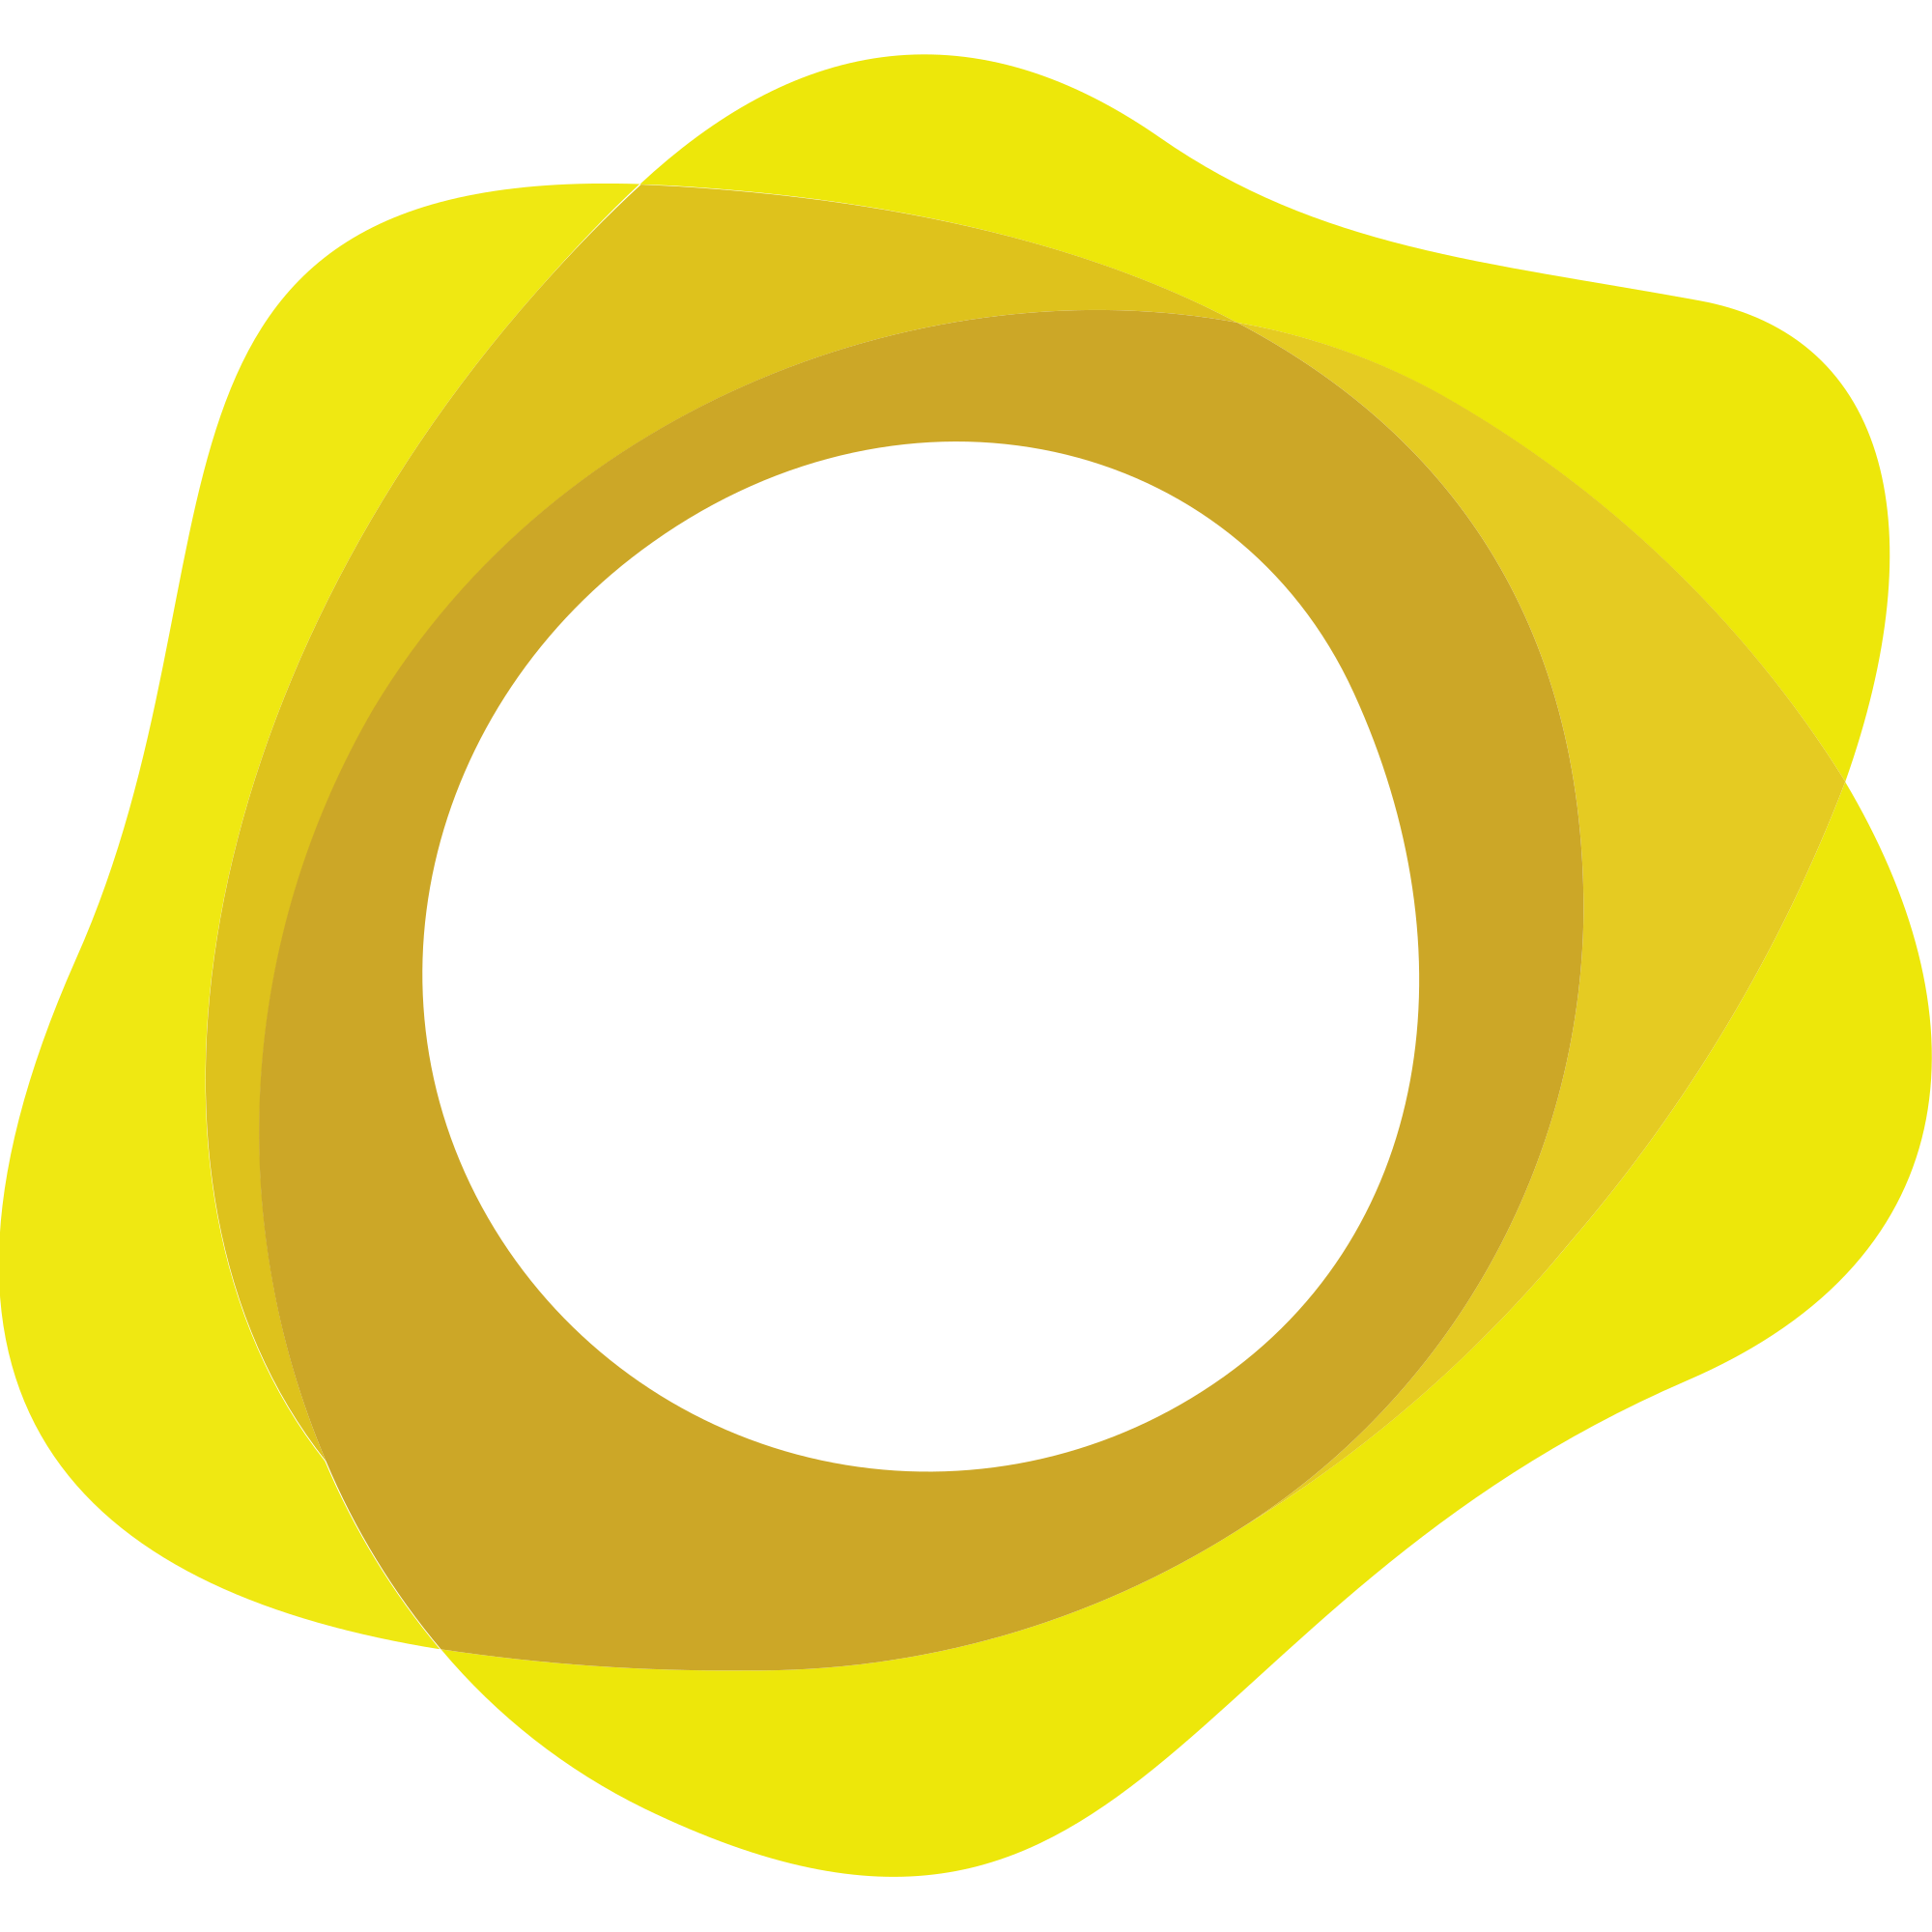 Pax Gold PAXG Logo | The Giving Block